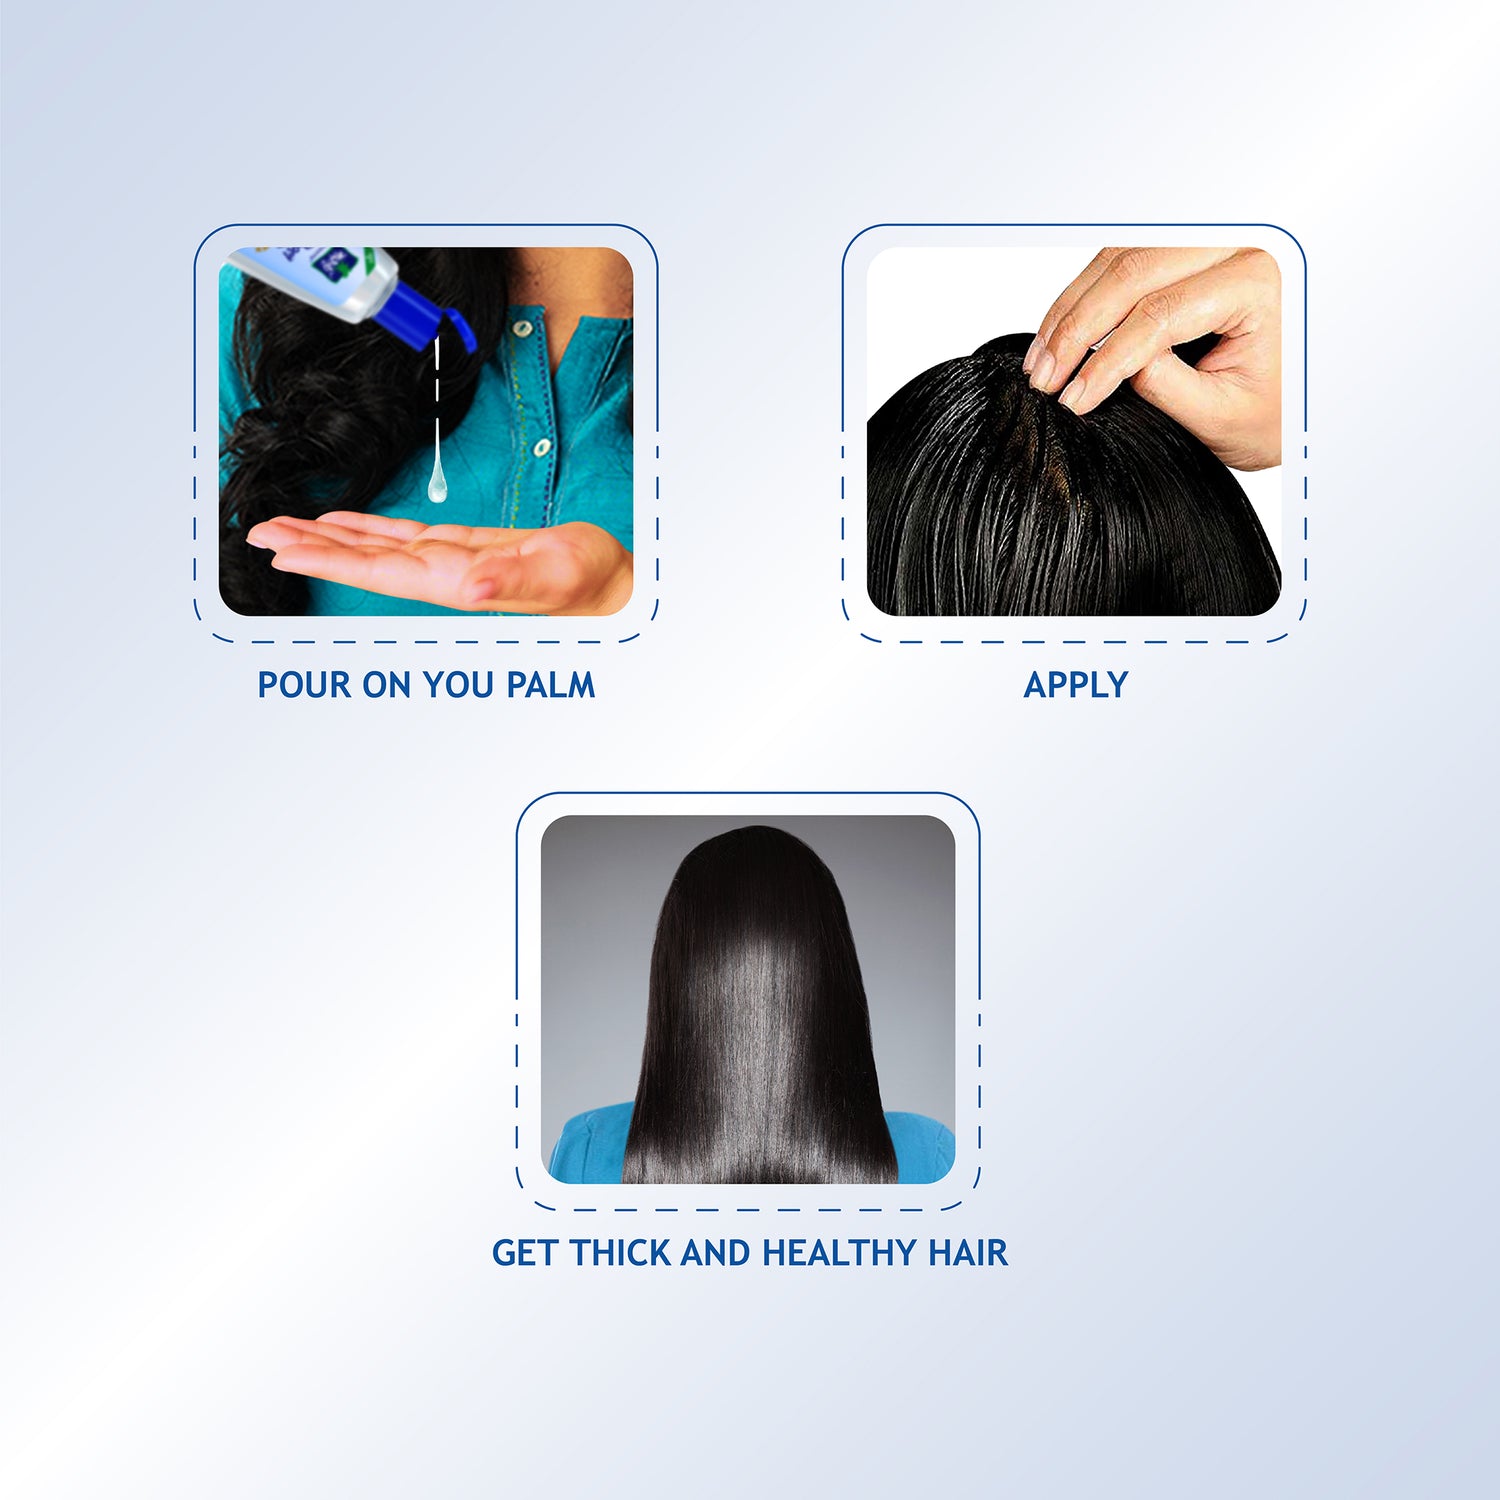 Parachute Hair Oil Advansed Beliphool (200ml)